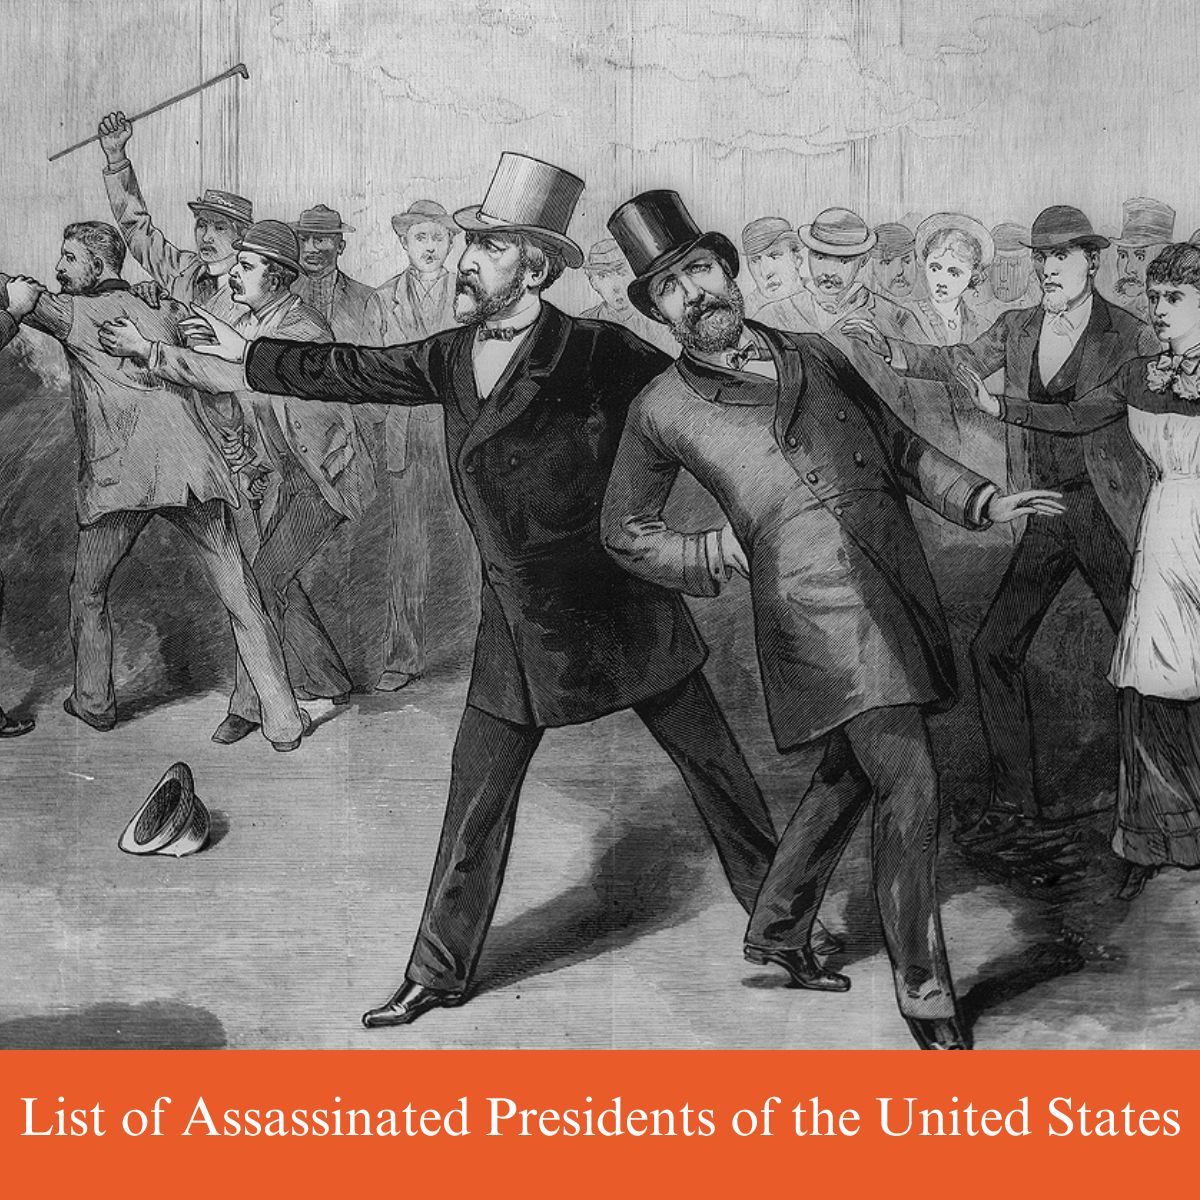 united states assassinated presidents list